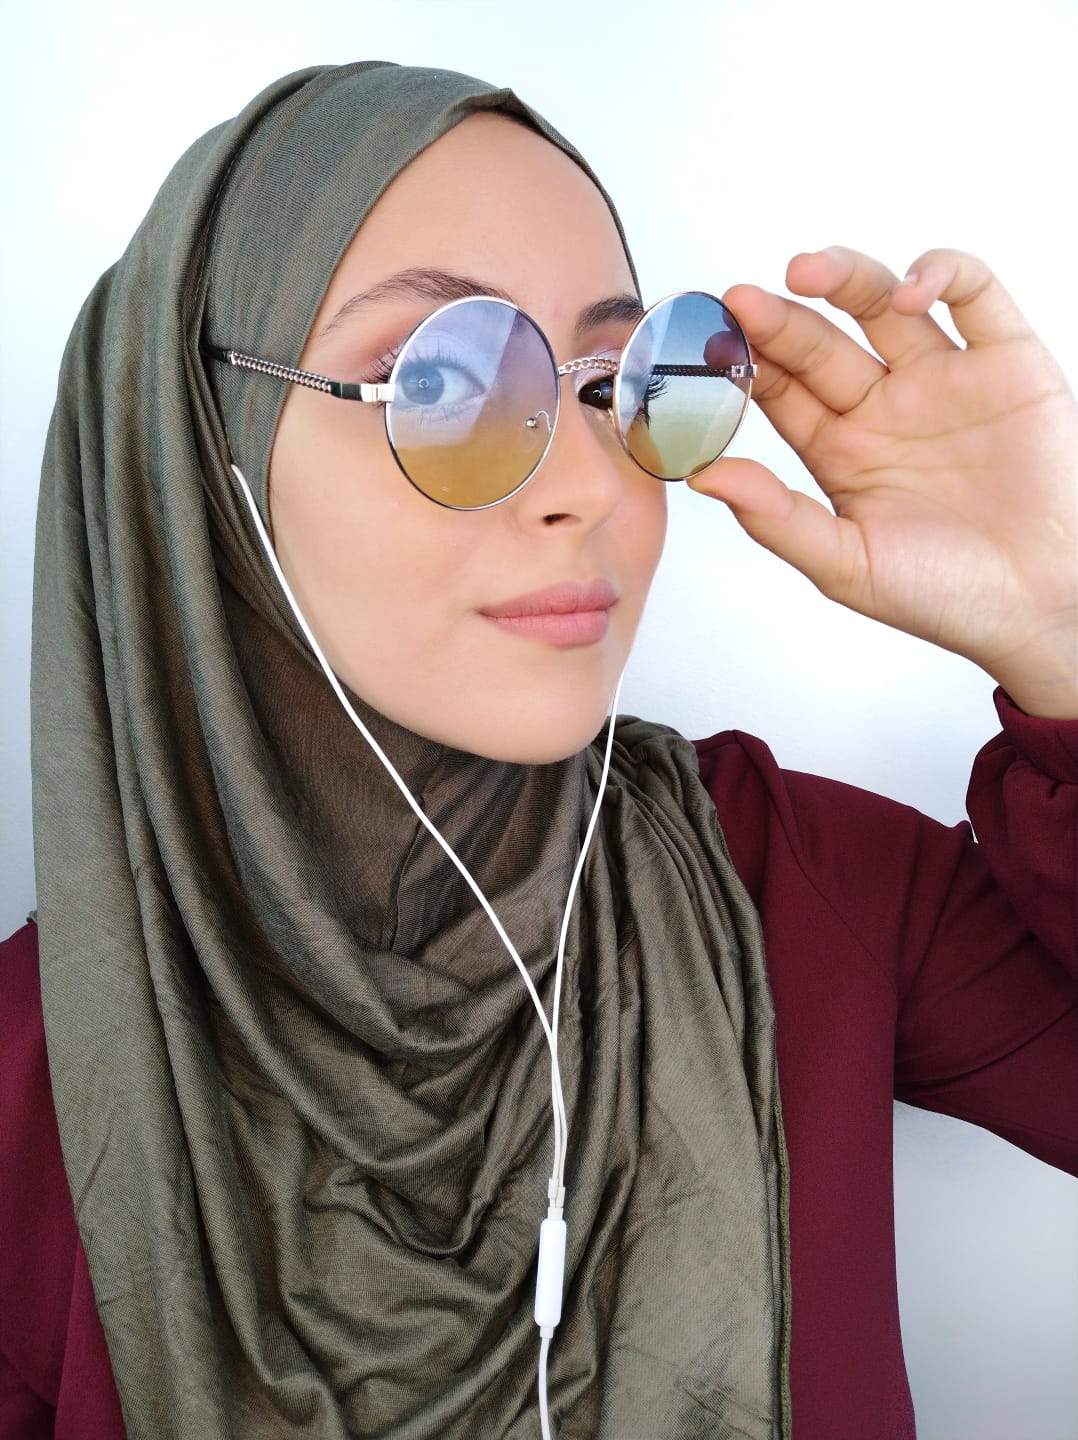 Hijab speciale cuffie o occhiali - Hijab Paradise Hijab, chador, velo, turbante, foulard, copricapo, musulmano, islamico, sciarpa, 